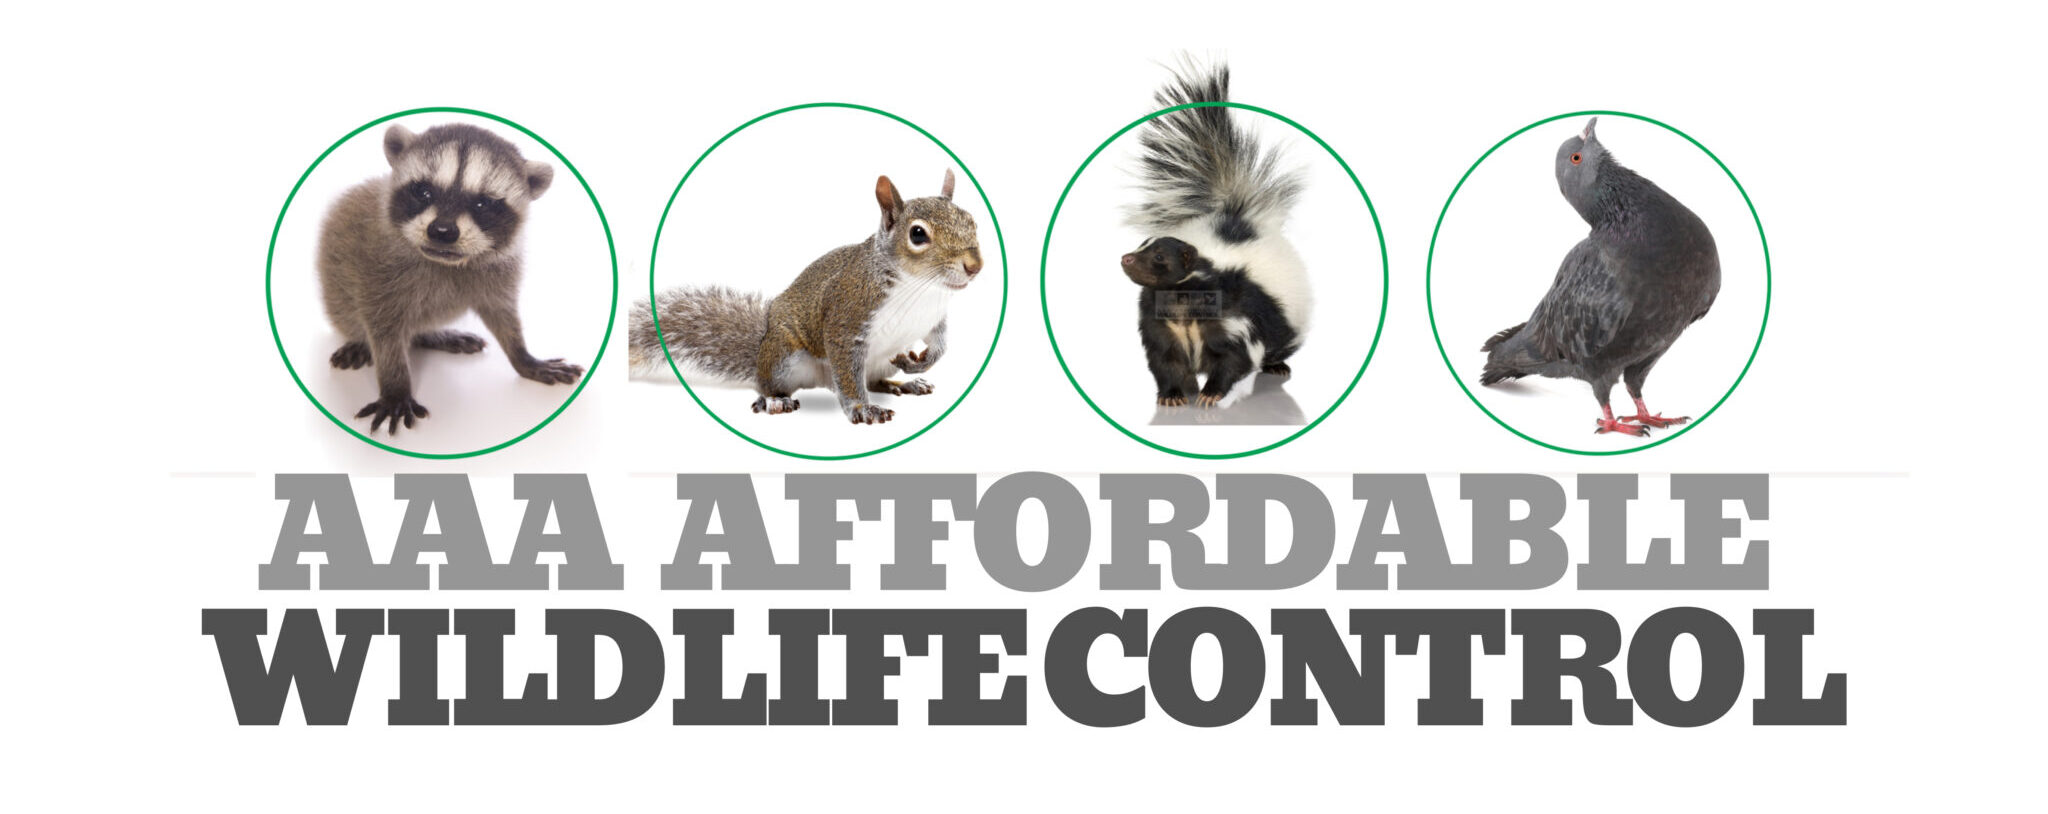 Wildlife Control Toronto logo